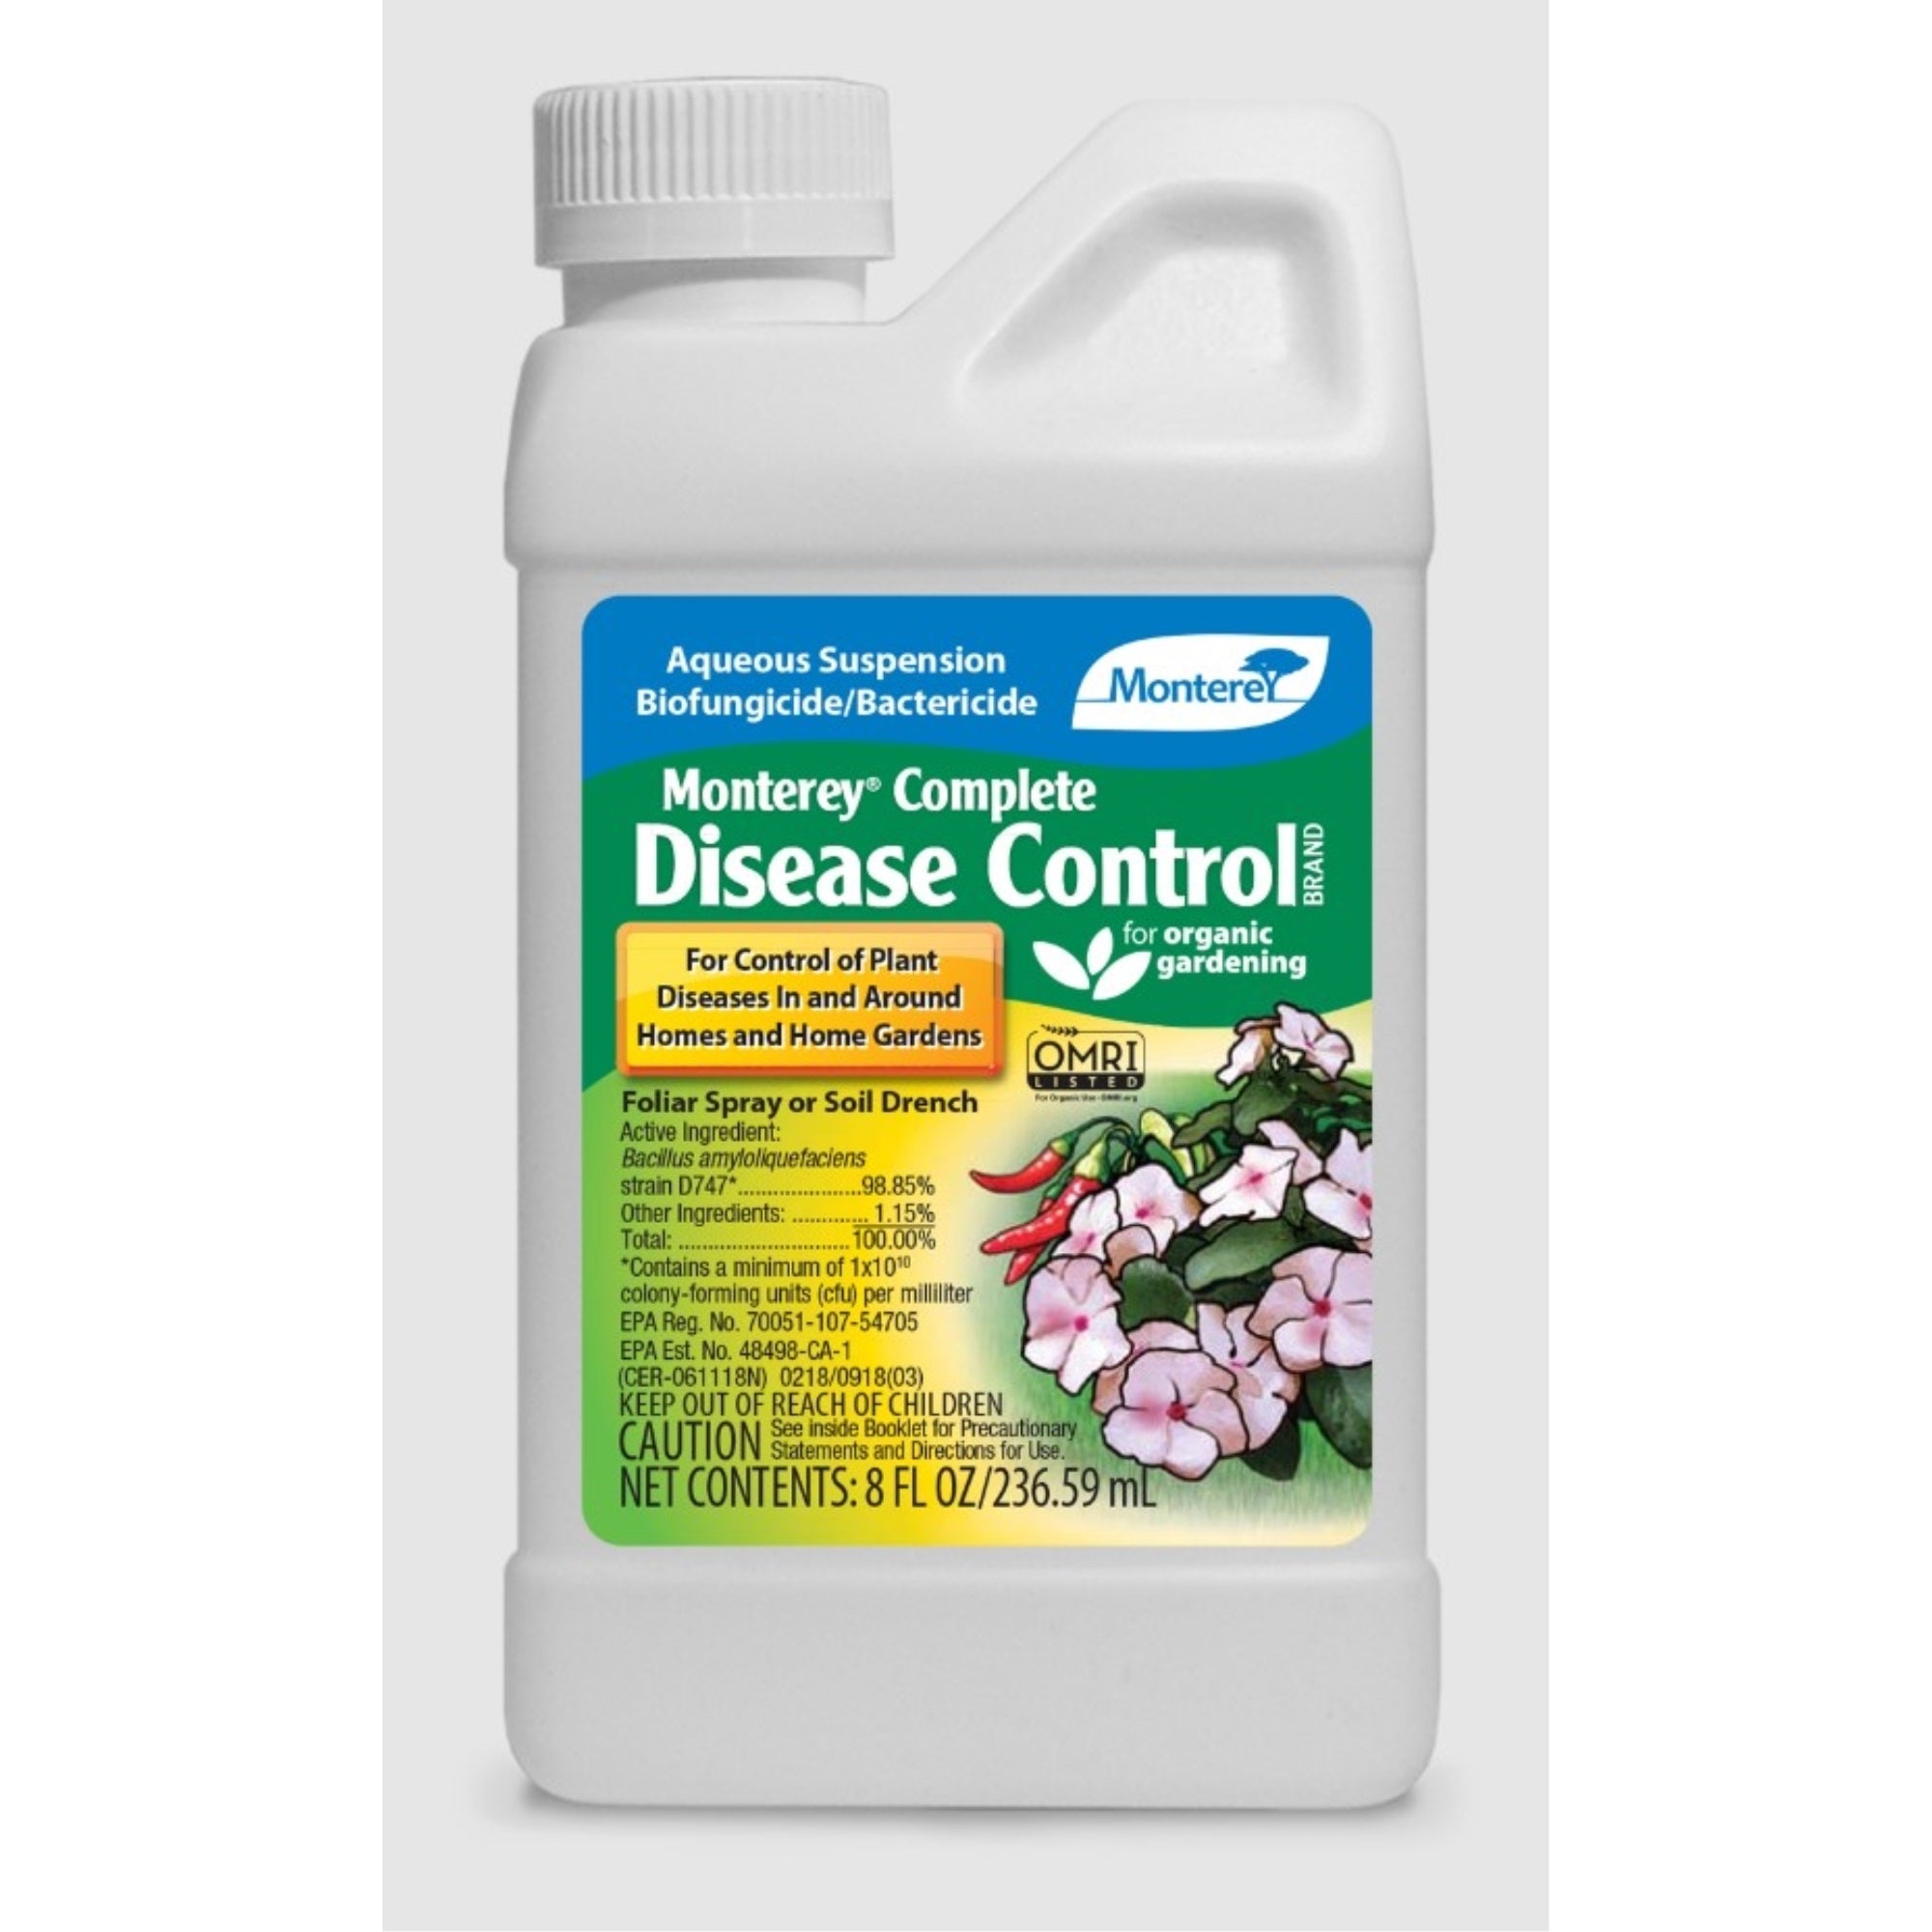 Monterey Complete Disease Control Biofungicide/Bactericid for Organic Gardening, 8oz